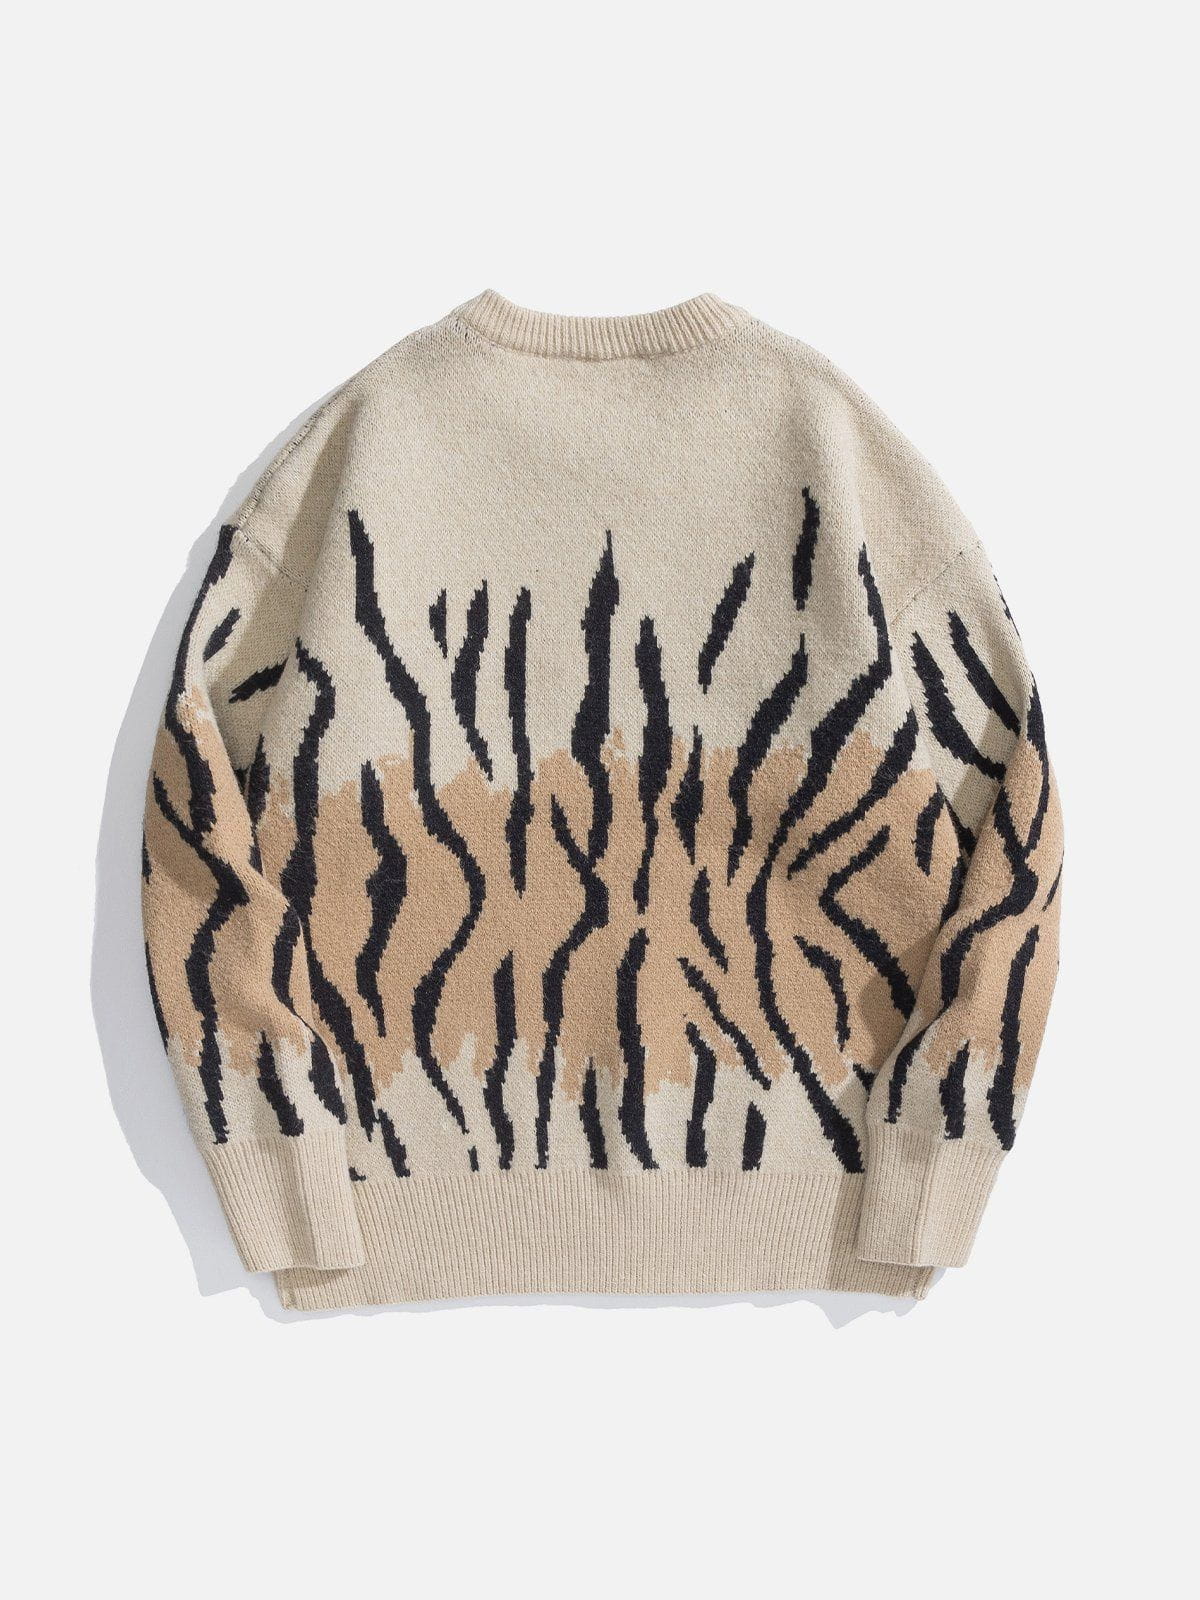 Majesda® - Zebra Pattern Knit Sweater outfit ideas streetwear fashion